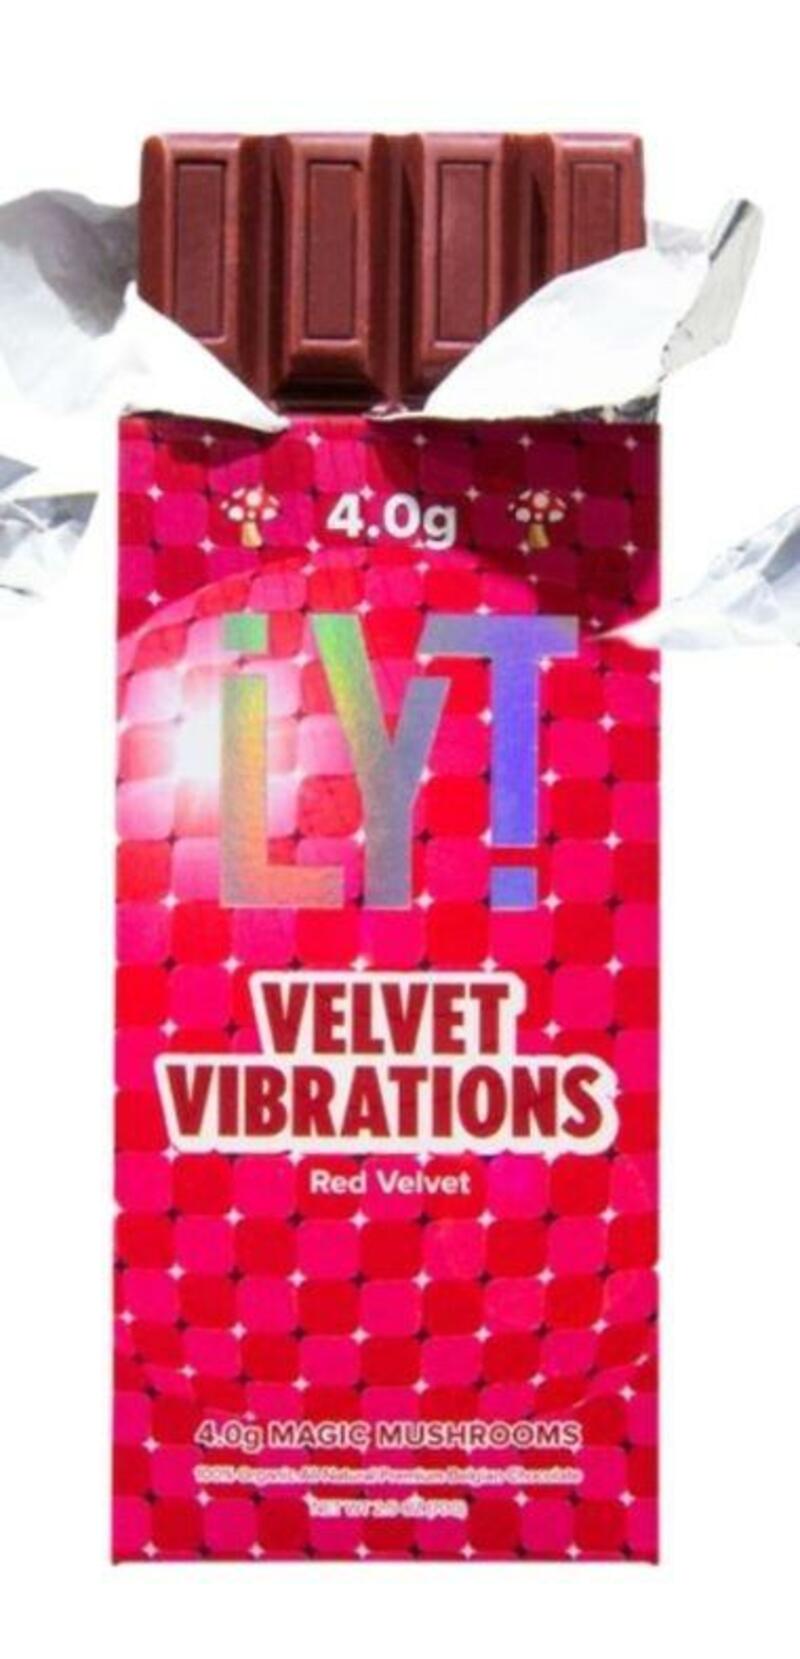 Velvet Vibrations Mushroom Chocolate 4g per bar.  12 microdoses